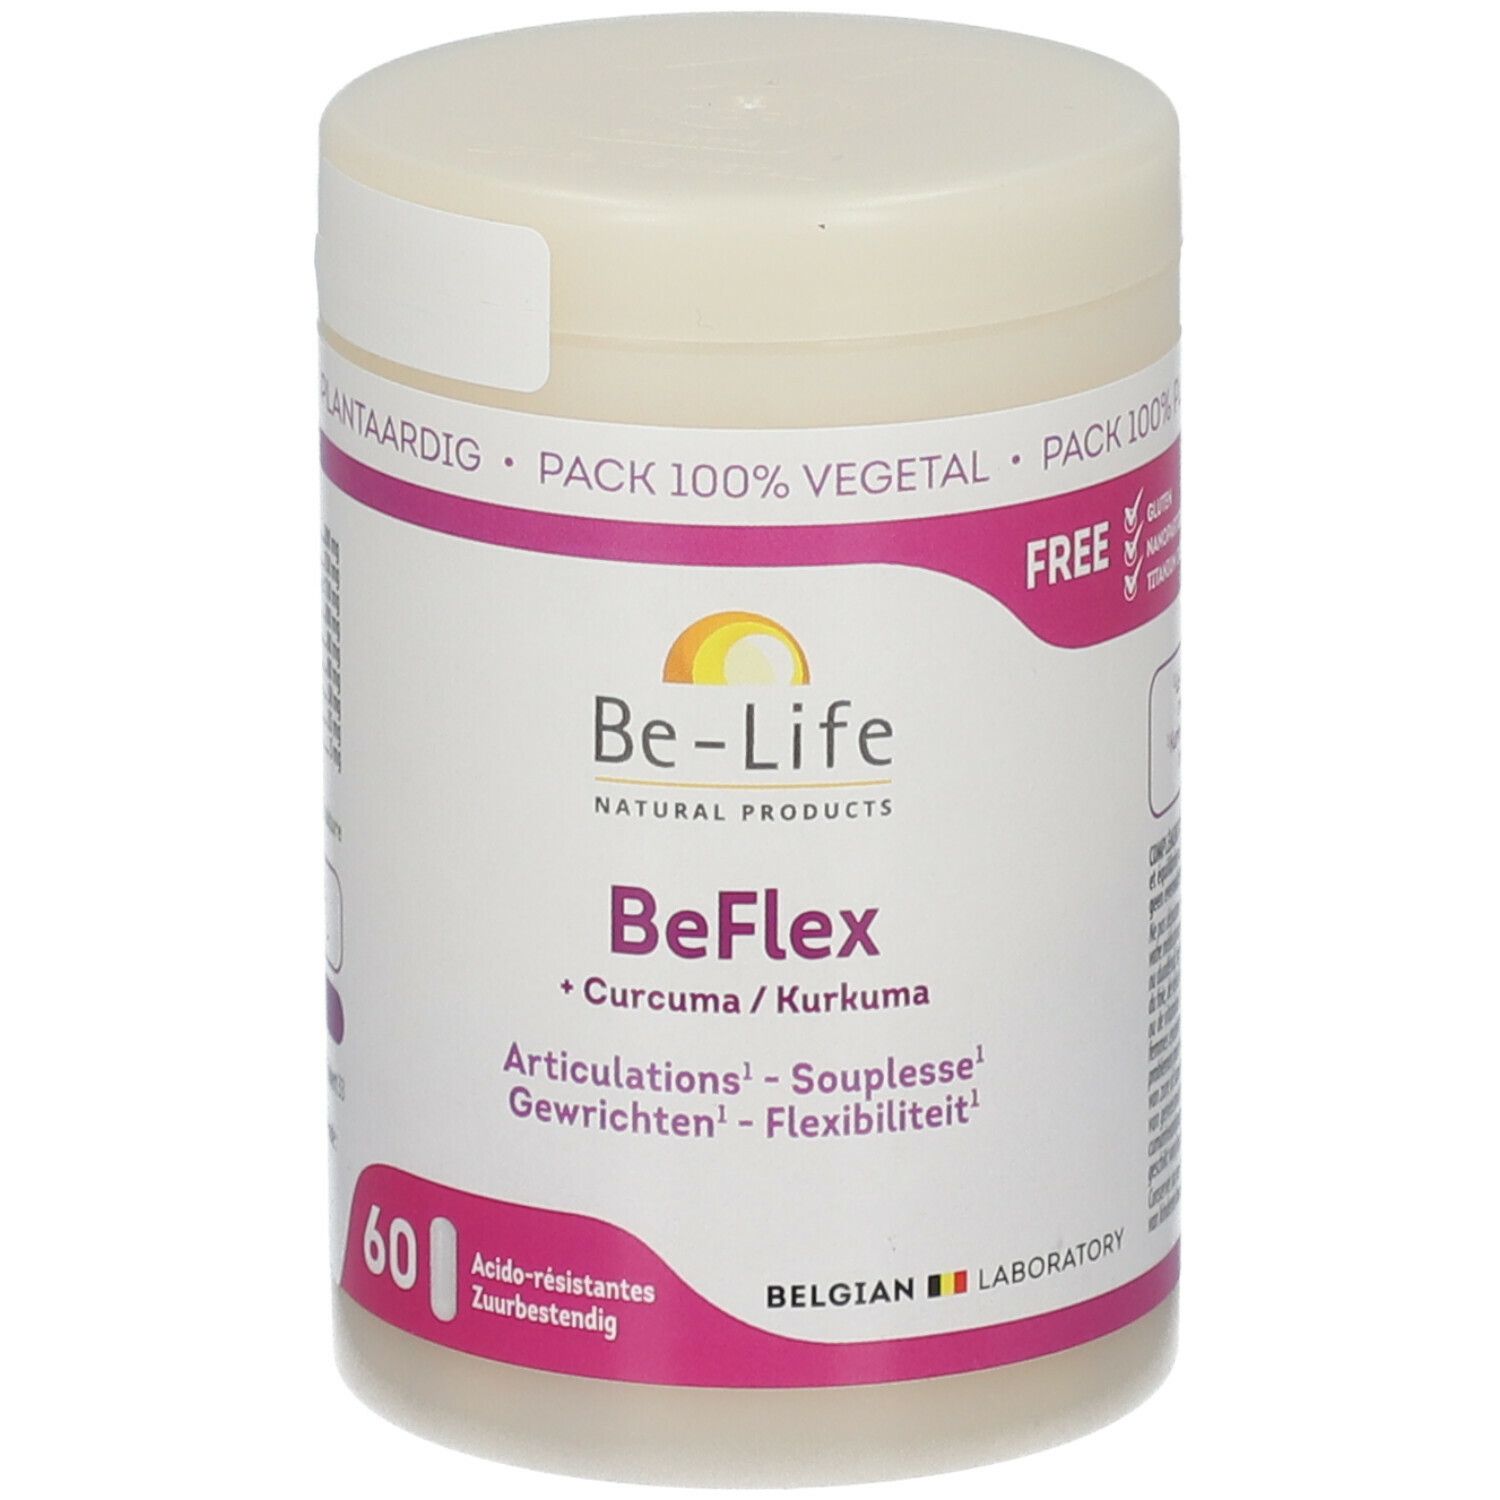 Be-Life BeFlex